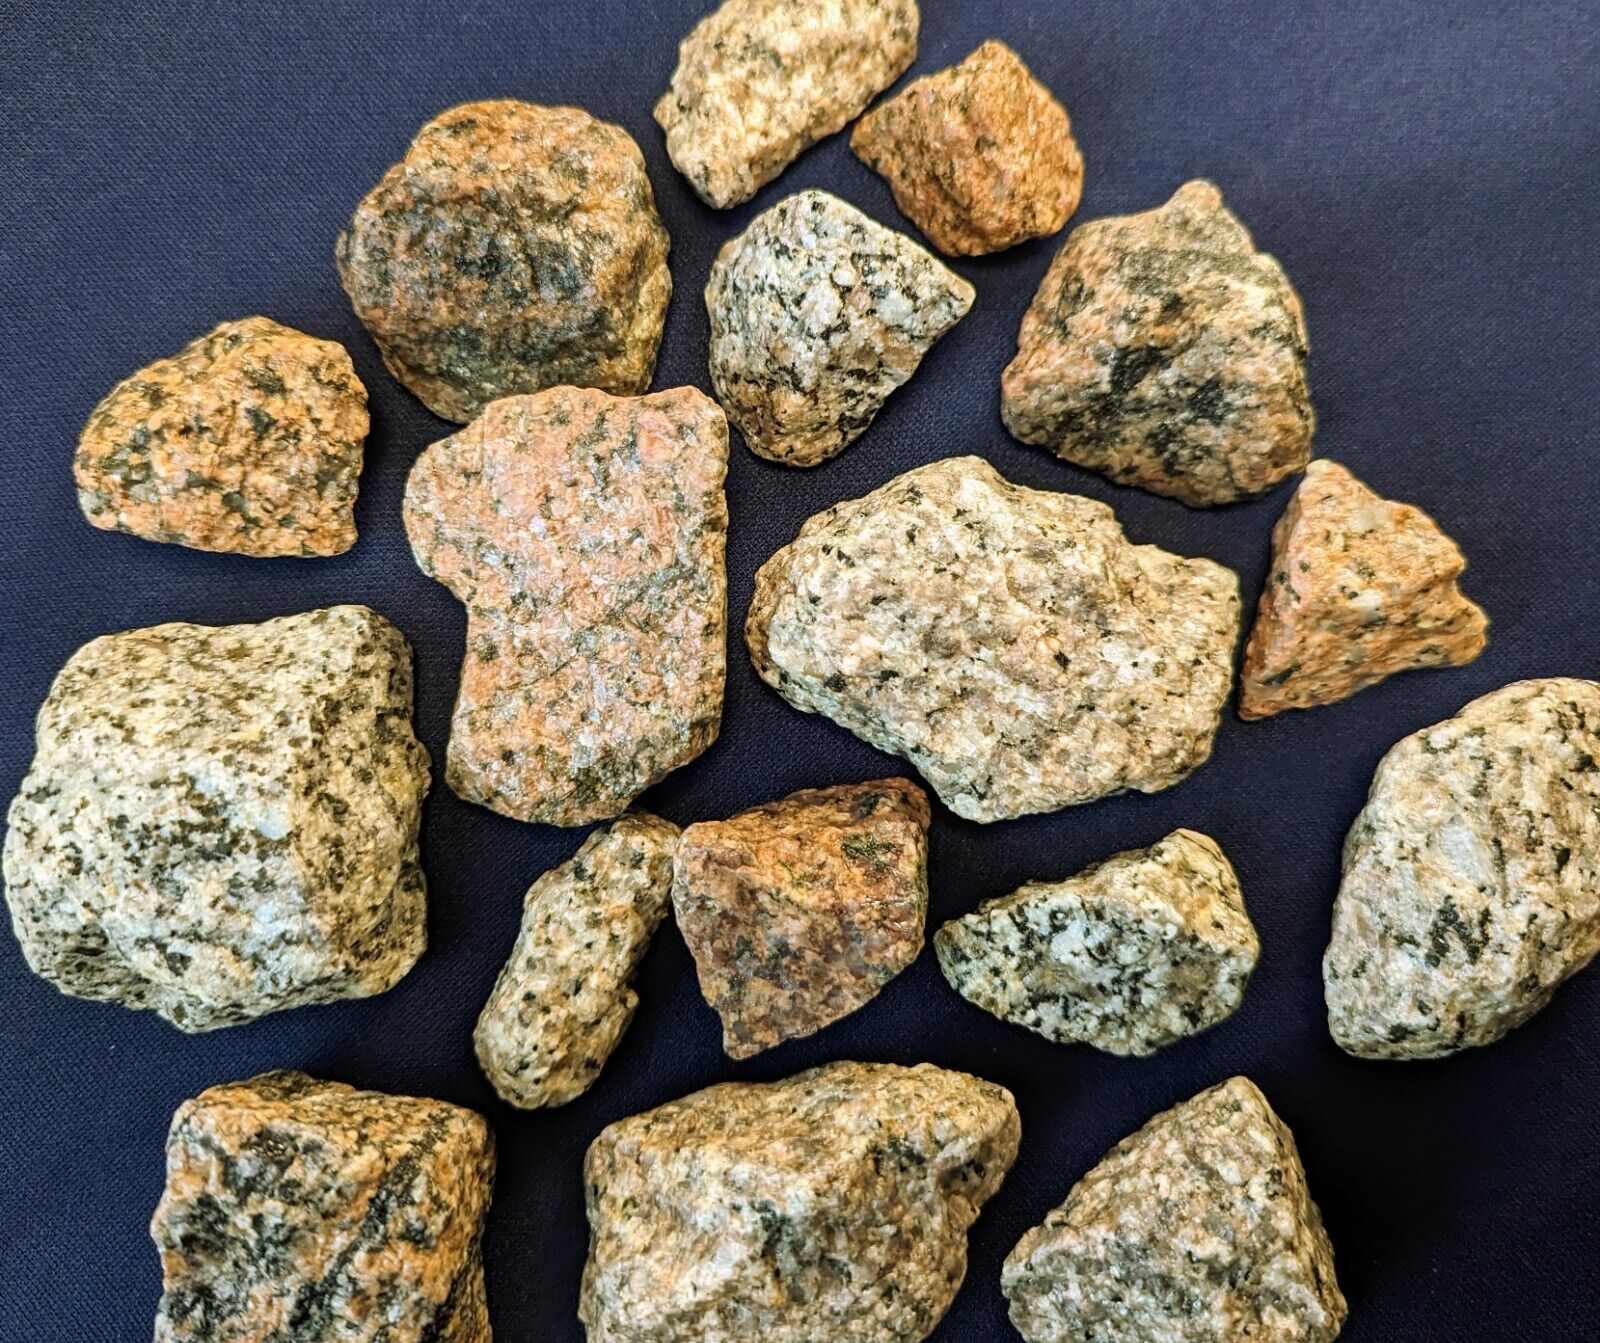 1.5 lb Granite HEALING Stones Asmt Bulk Crystals Rough Natural Tumble Rocks MED